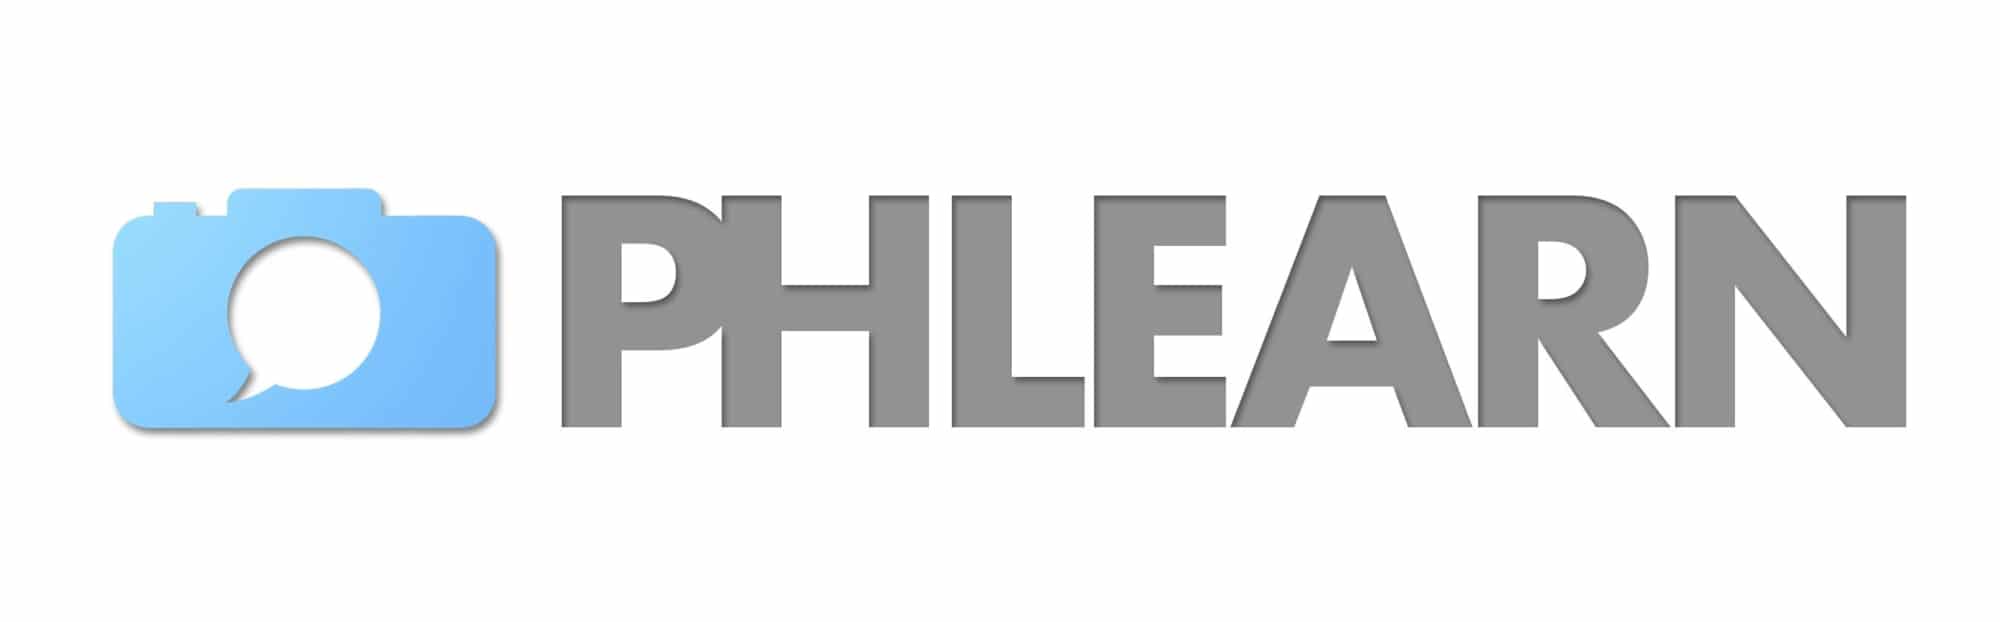 Phlearn-Logo-Large